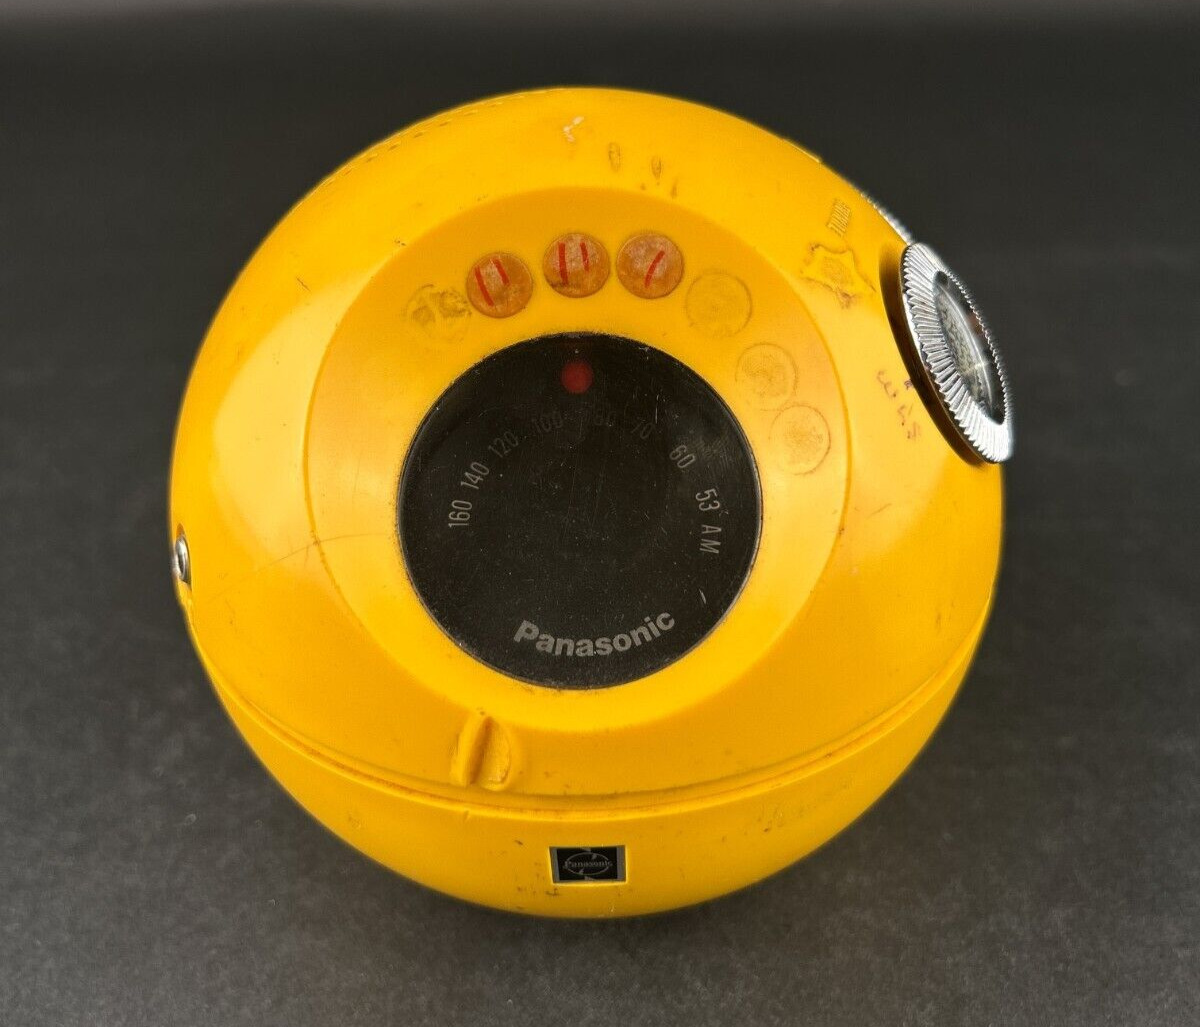 Vintage Panasonic Panapet Model R-70 Portable AM Radio Round Orb Yellow